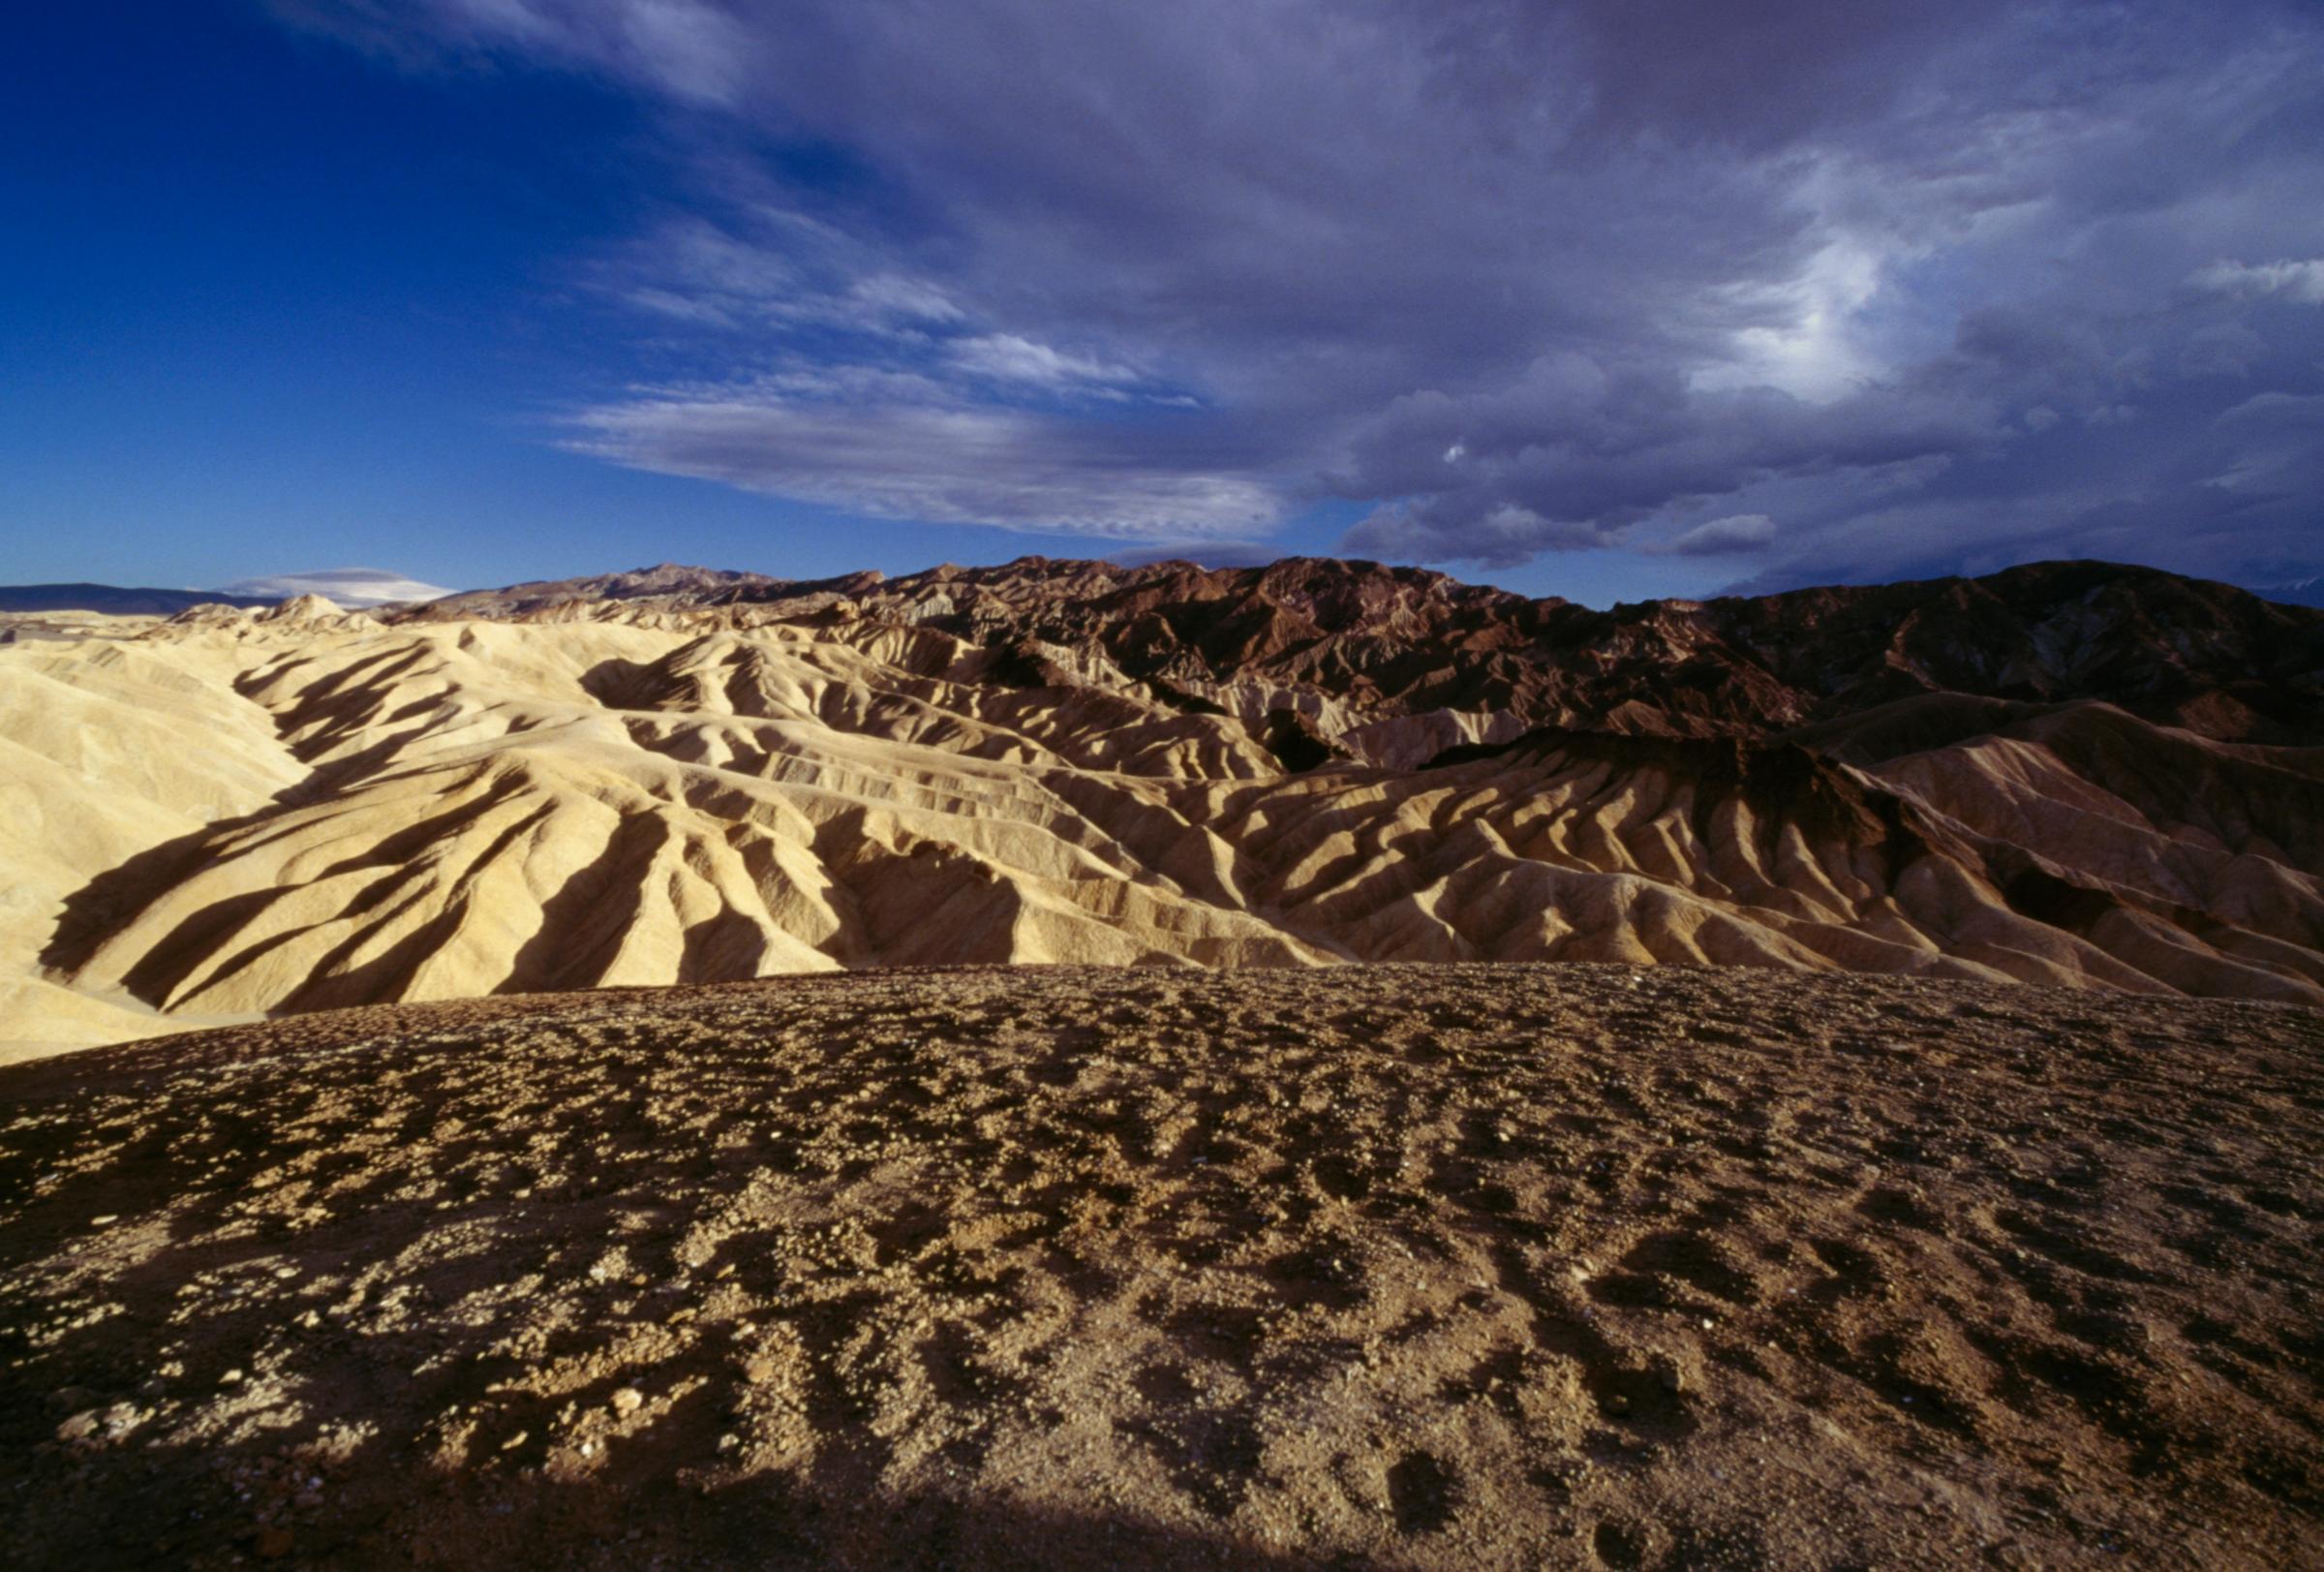 Badland formations, Zabriskie Point, Death Valley National Park, California, United States of America.